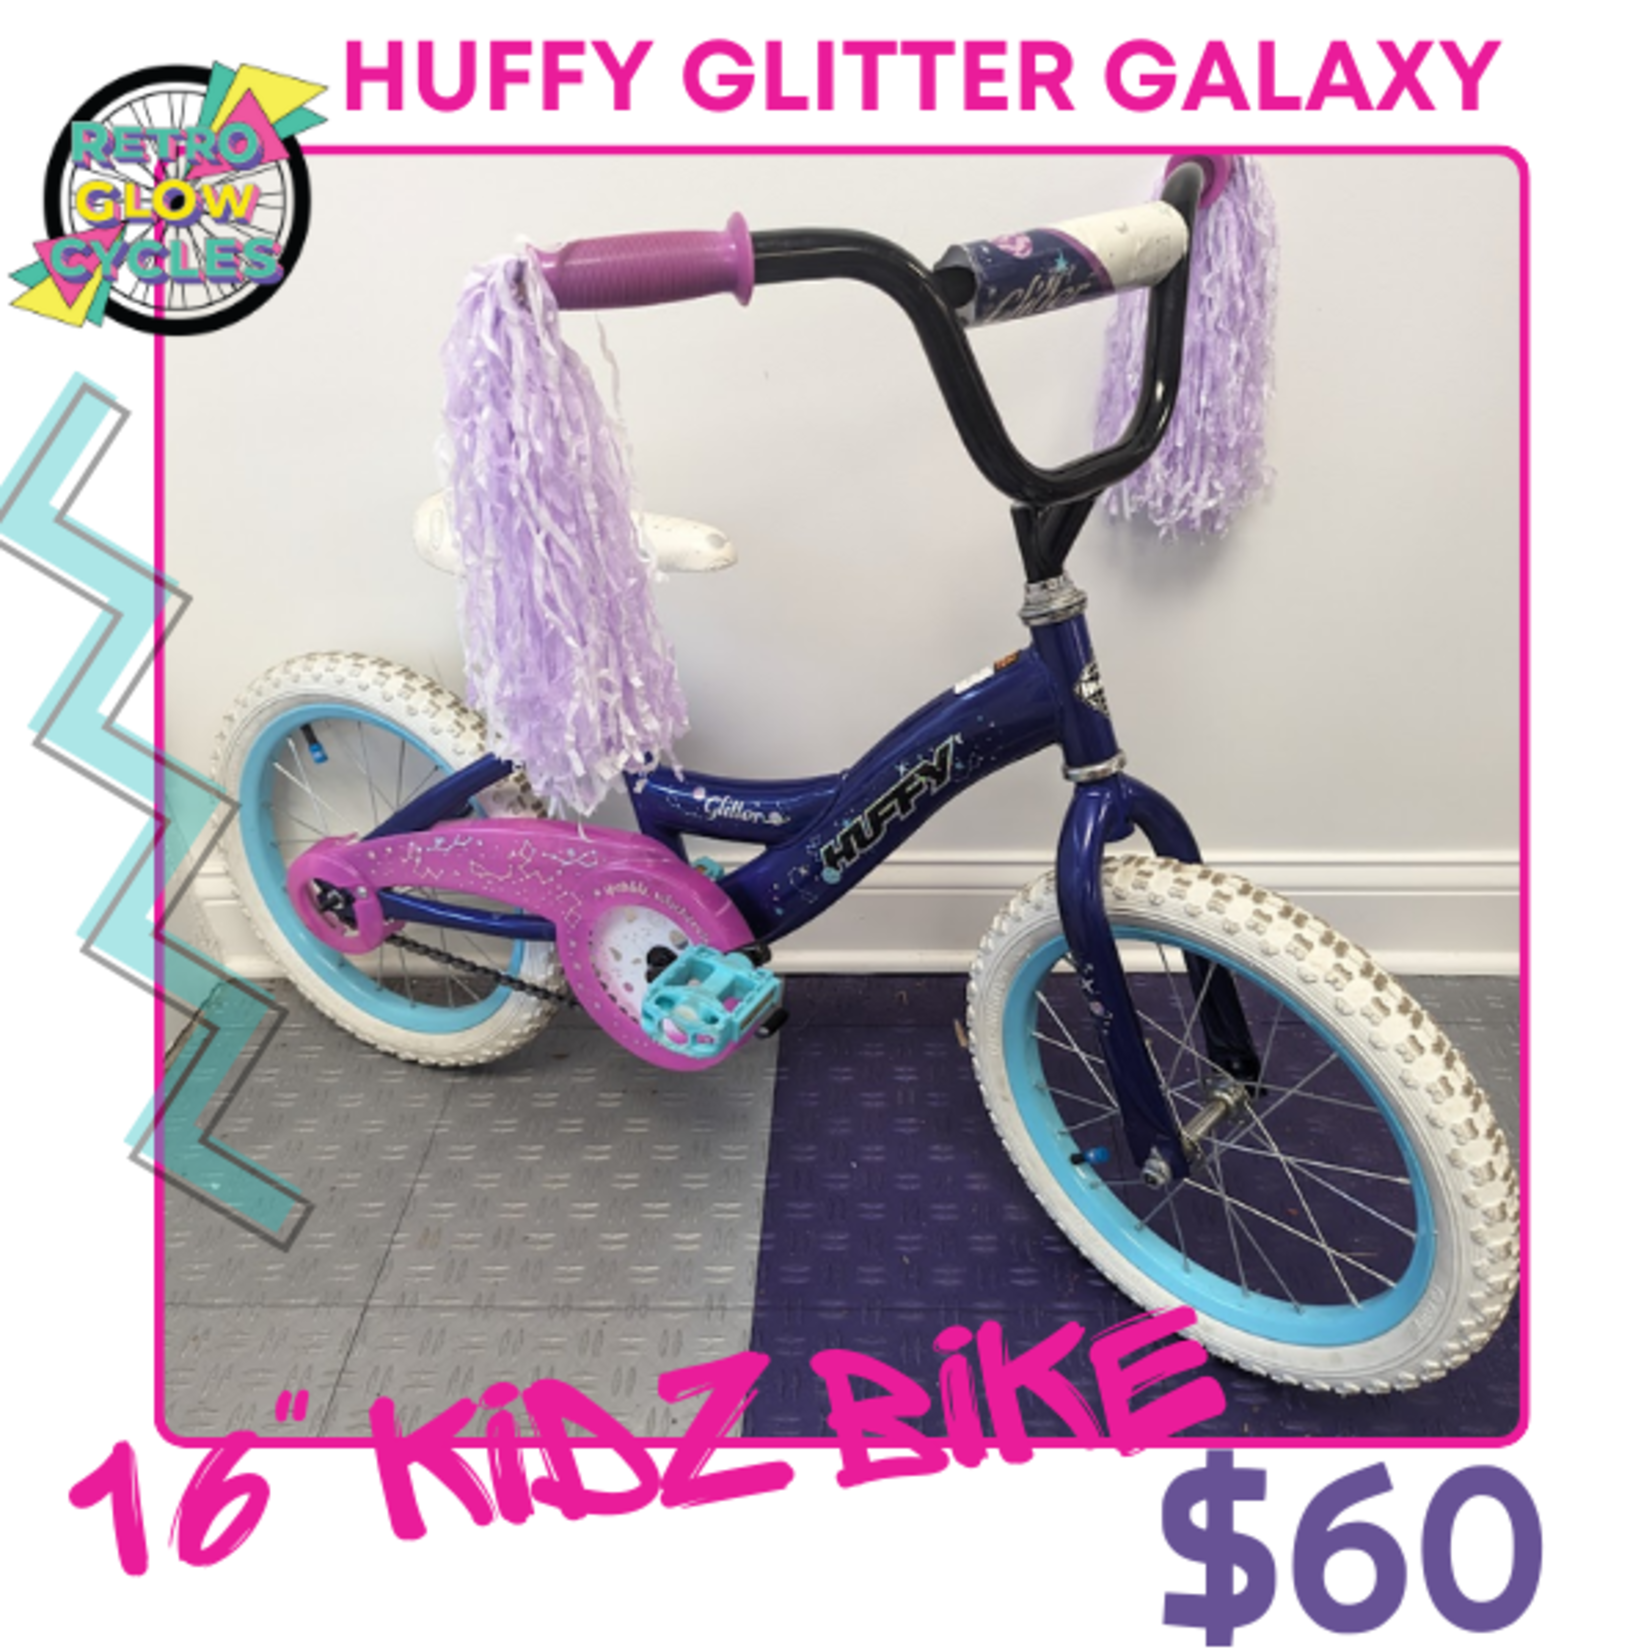 Huffy Huffy Glitter Galaxy 16" Kidz Bike